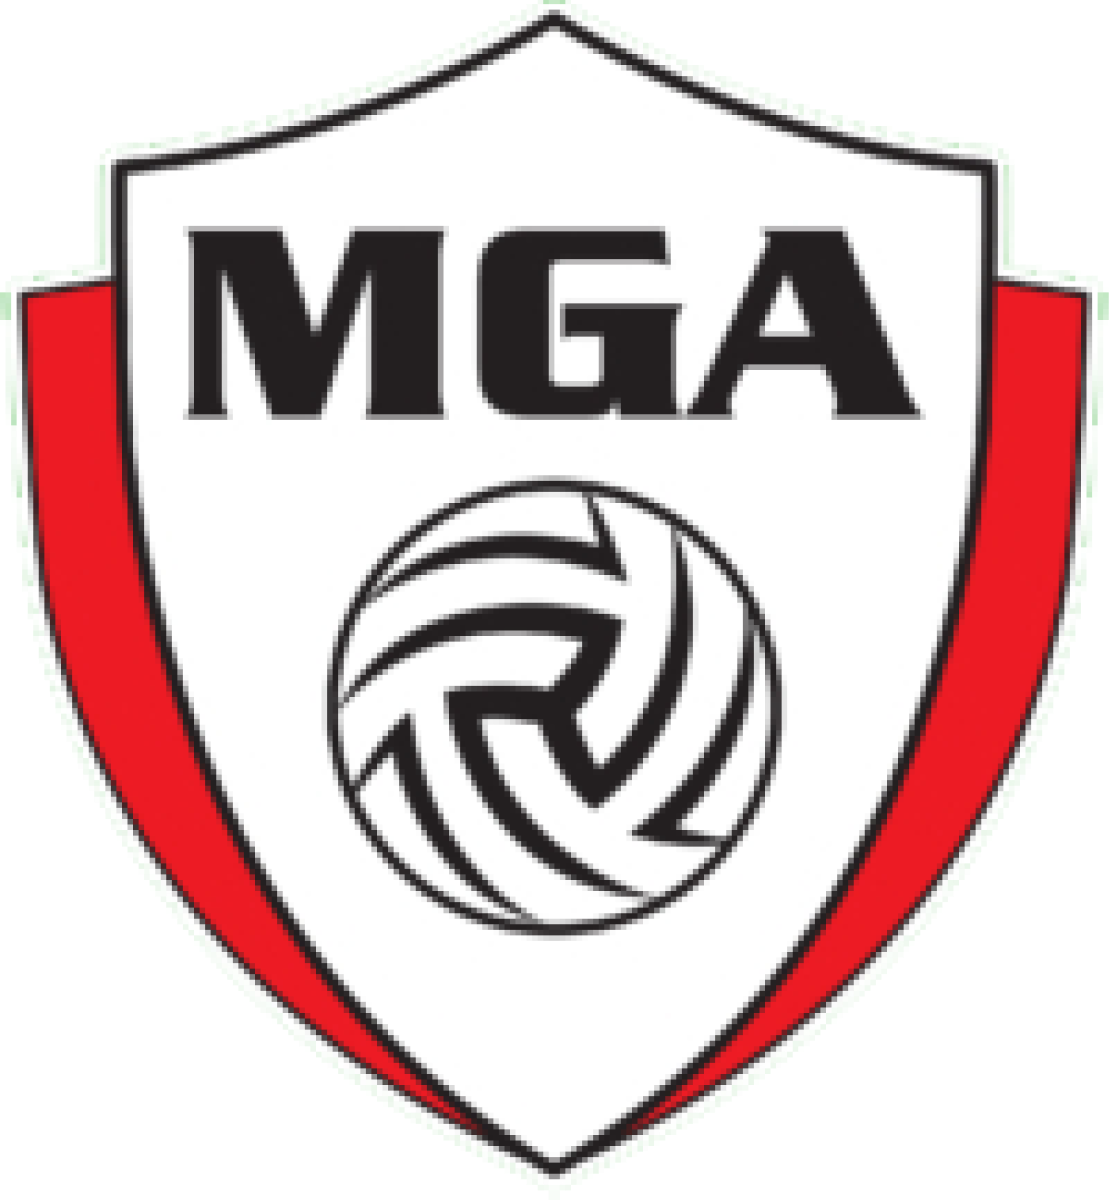 mga-logo